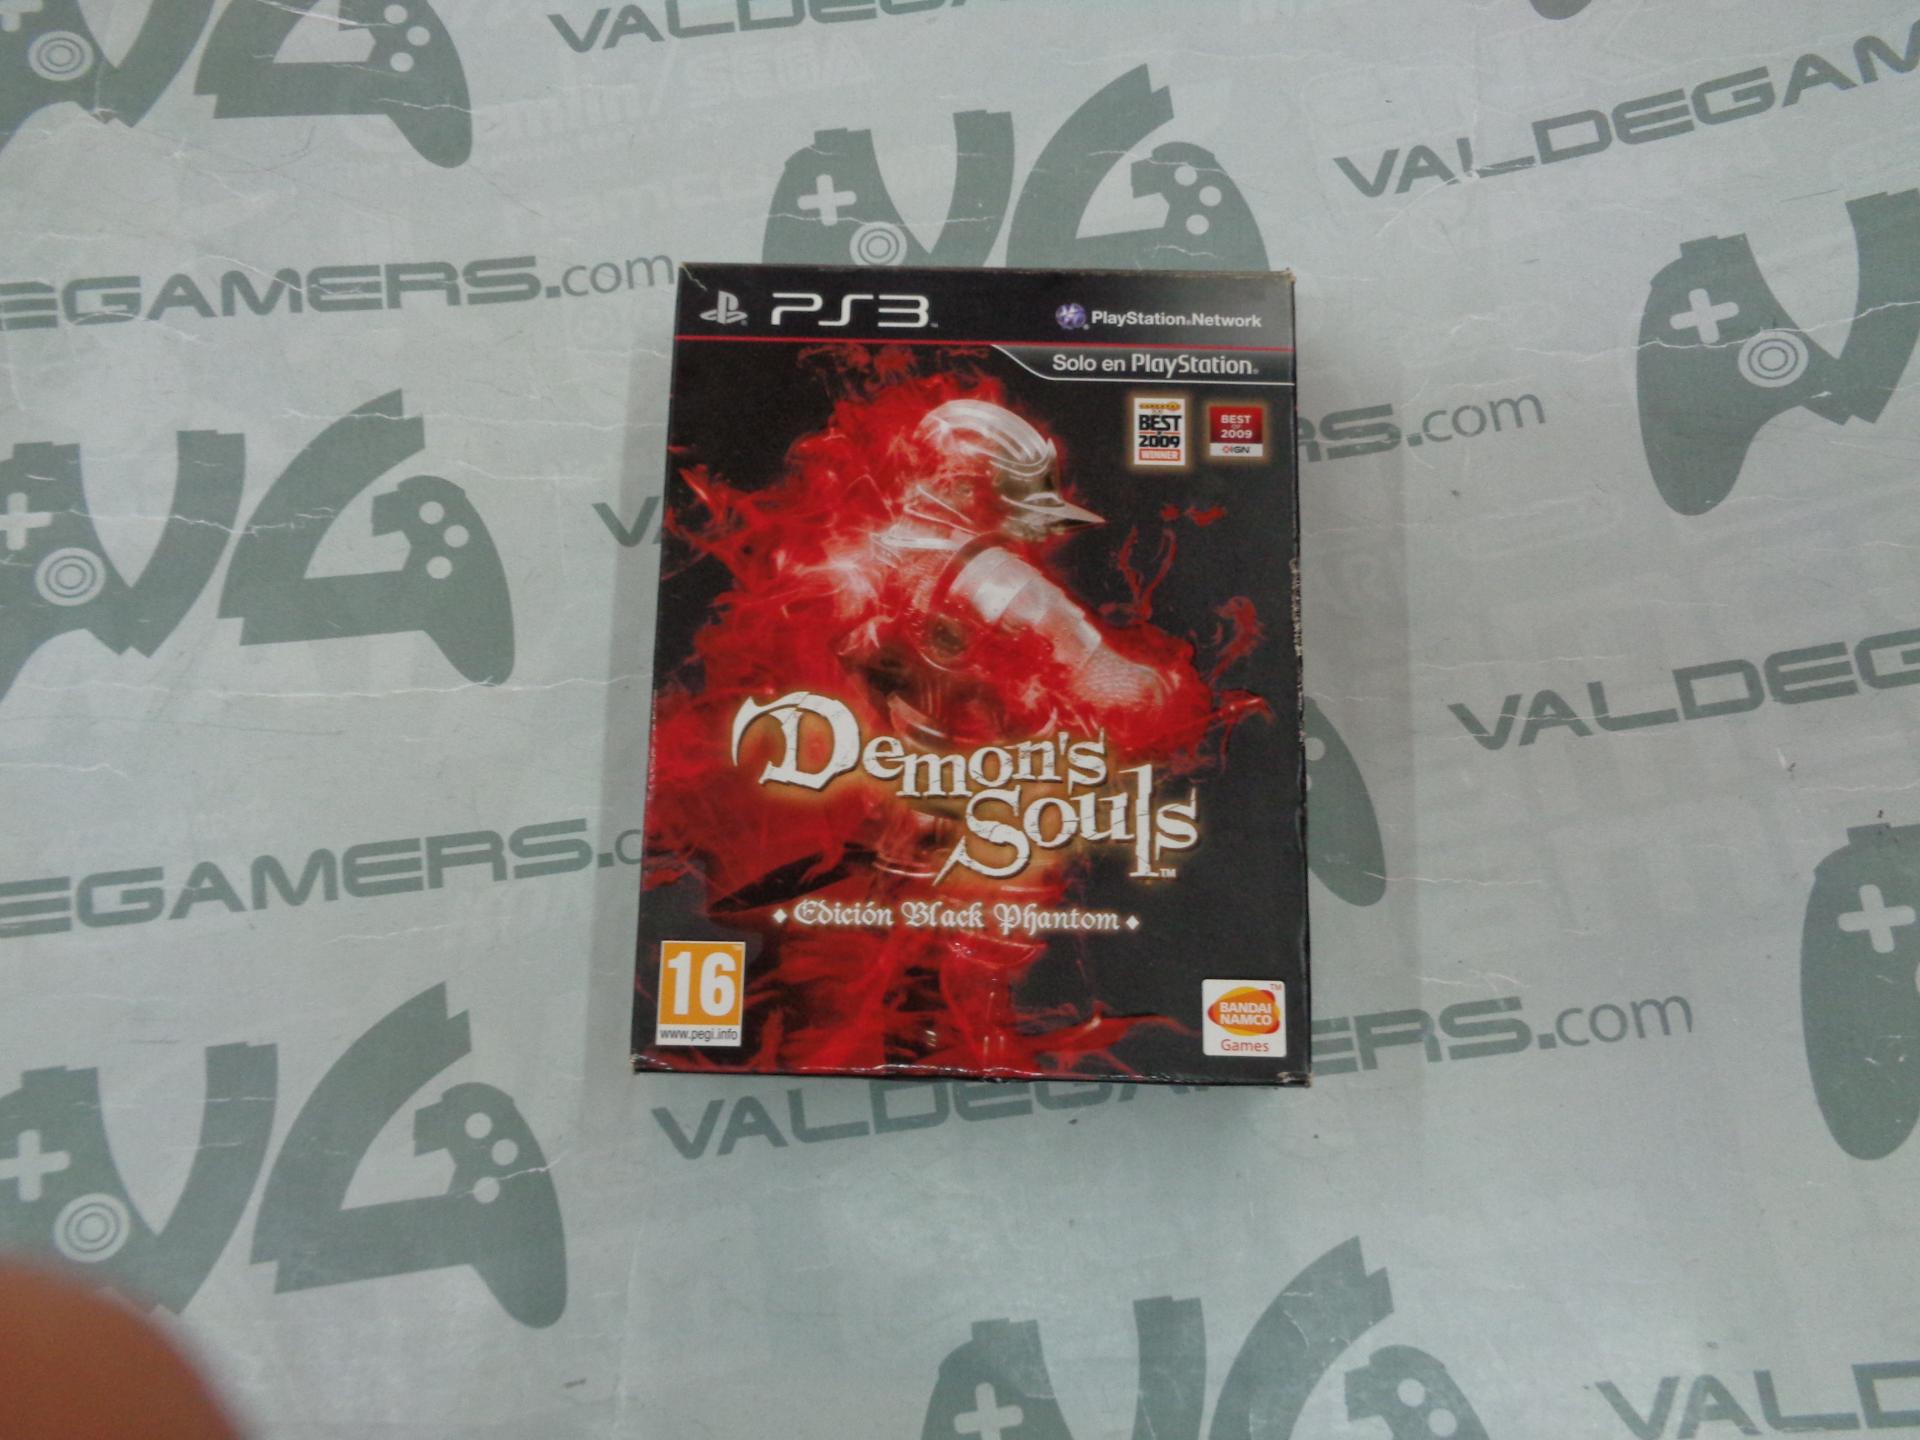 Demon's Souls: Black Phantom Edition, Games